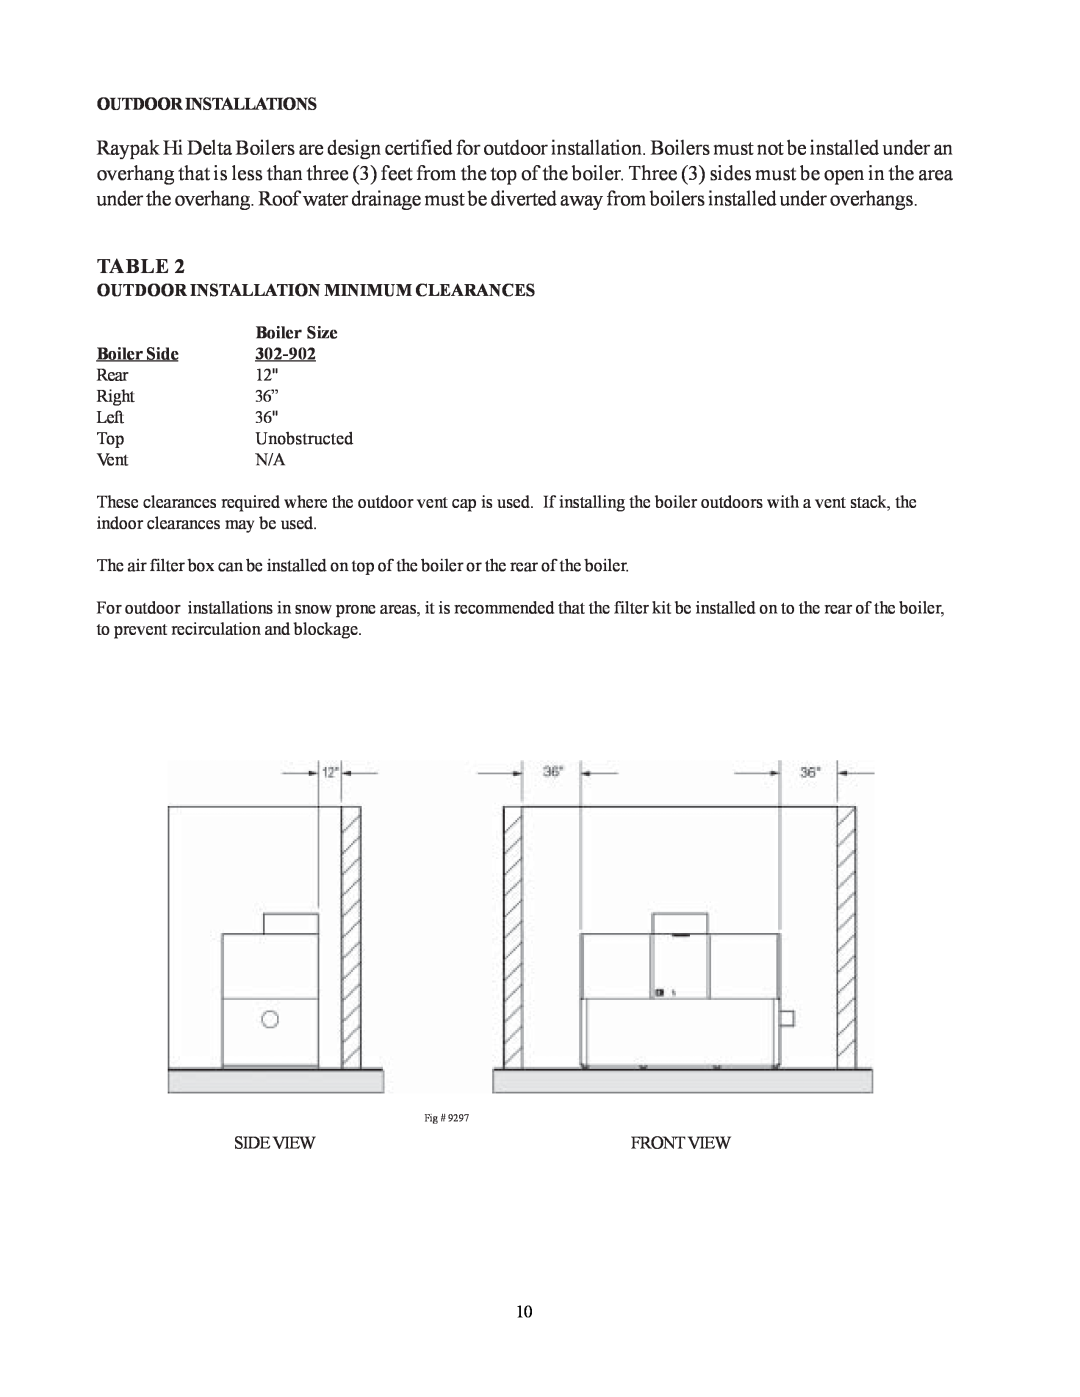 Raypak 302-902 manual Outdoorinstallations, Outdoor Installation Minimum Clearances, Boiler Size, Boiler Side 